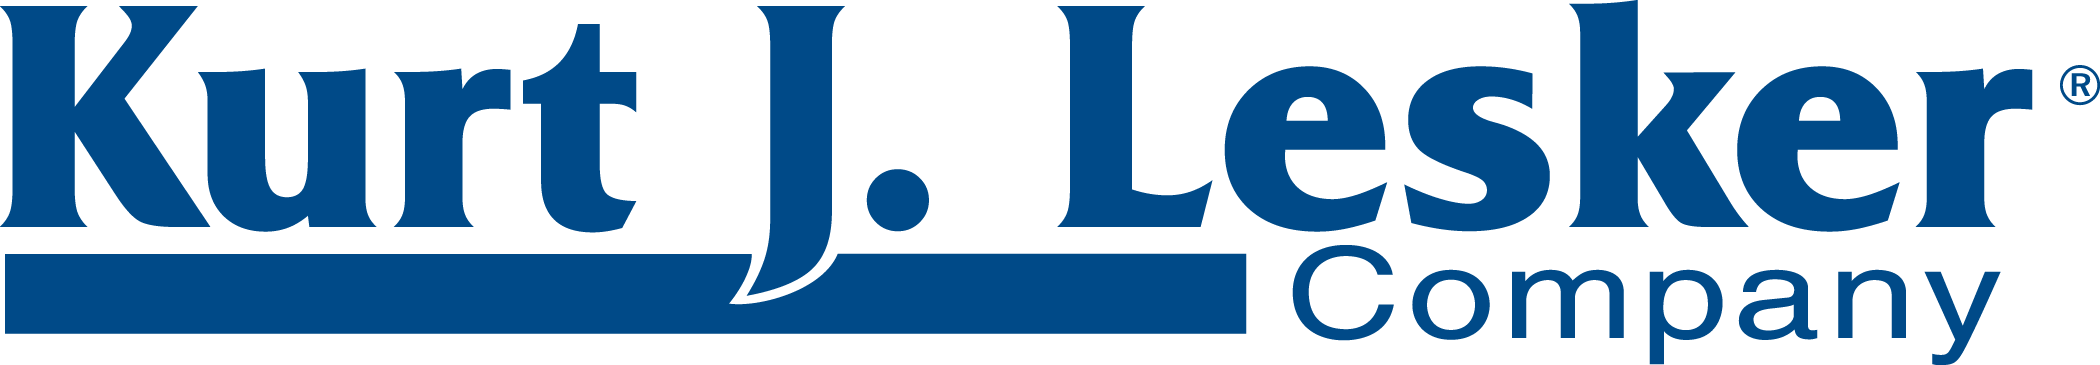 Lesker_Logo_PMS-301.png